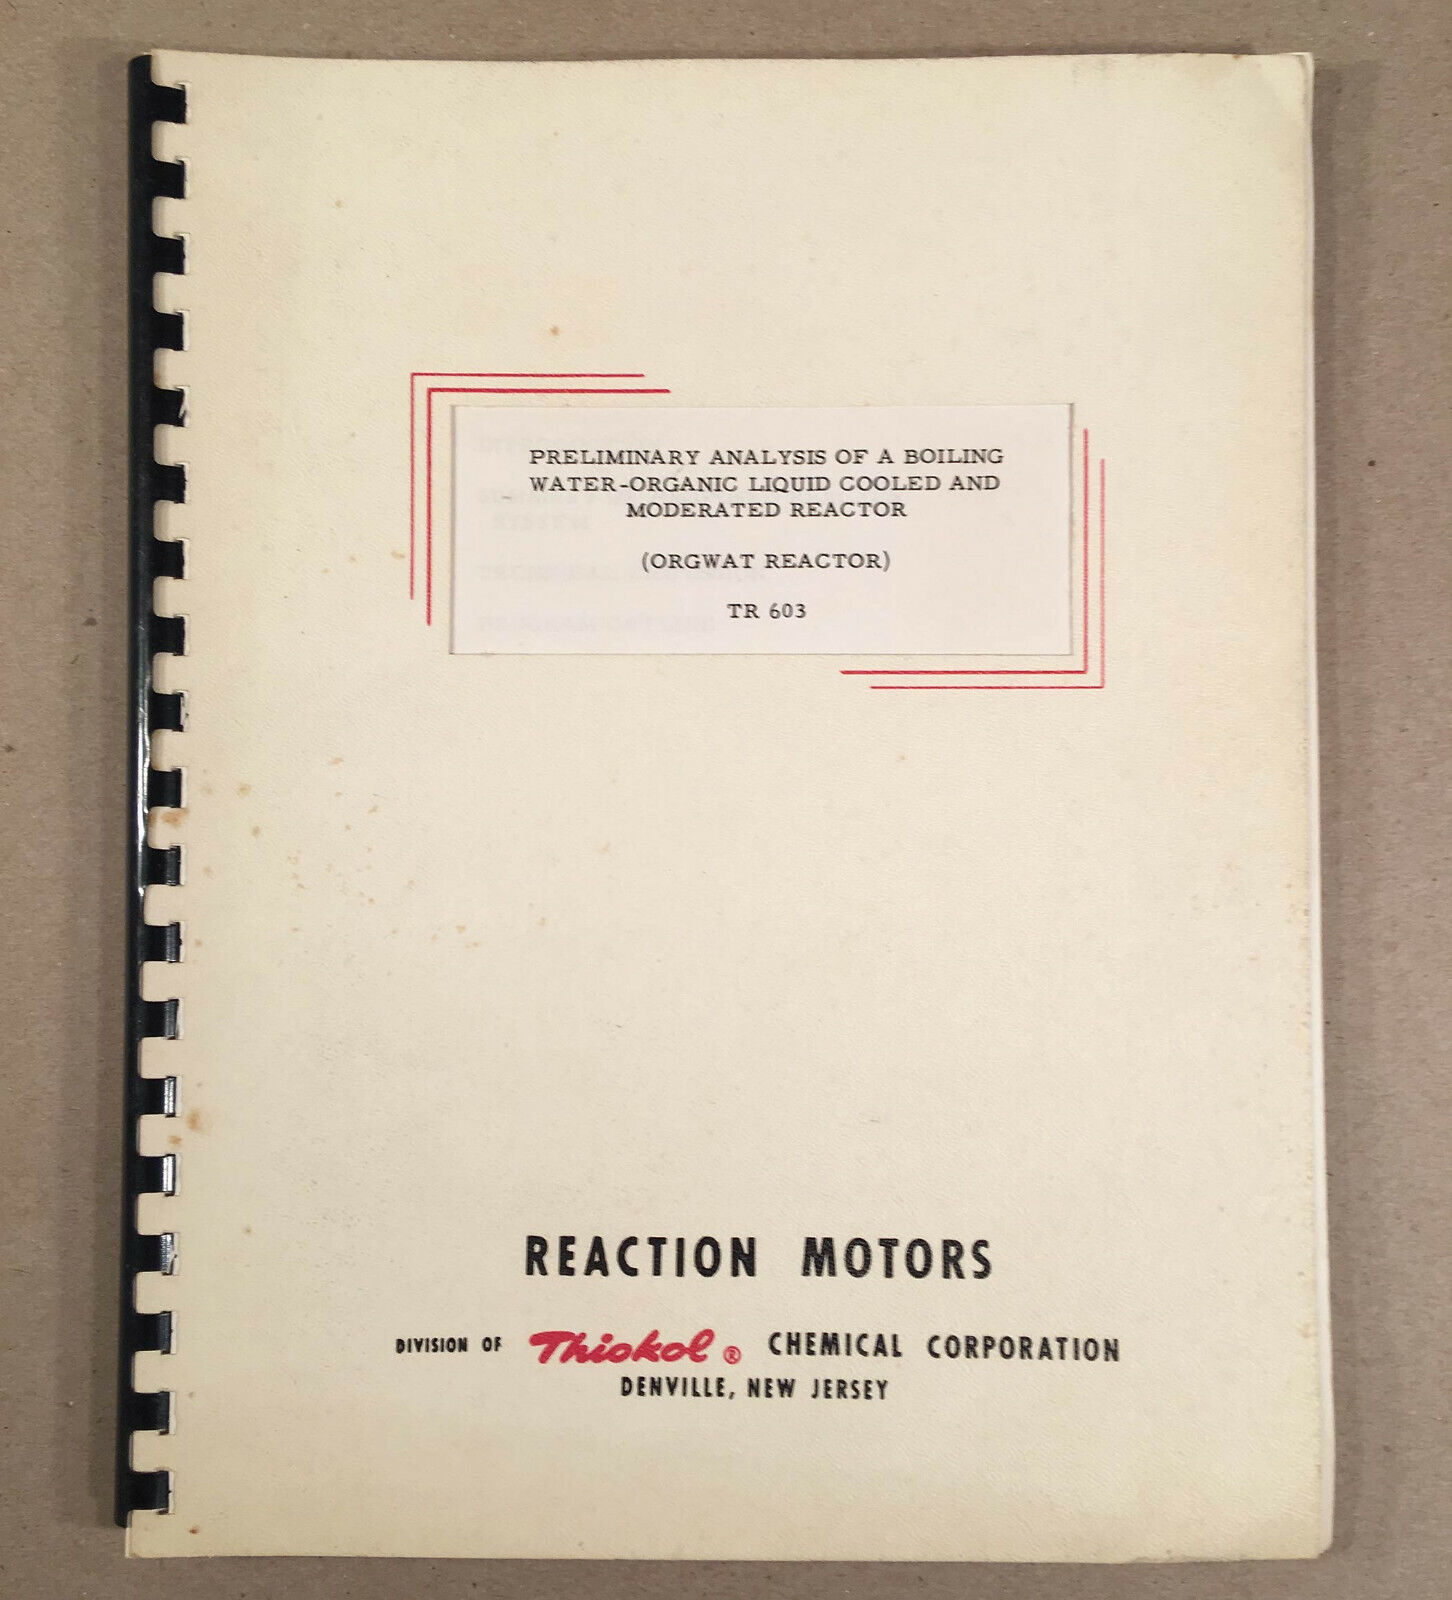 Denville NJ: THIOKOL REACTION MOTORS 1959 Organic/Water Nuclear Reactor Analysis